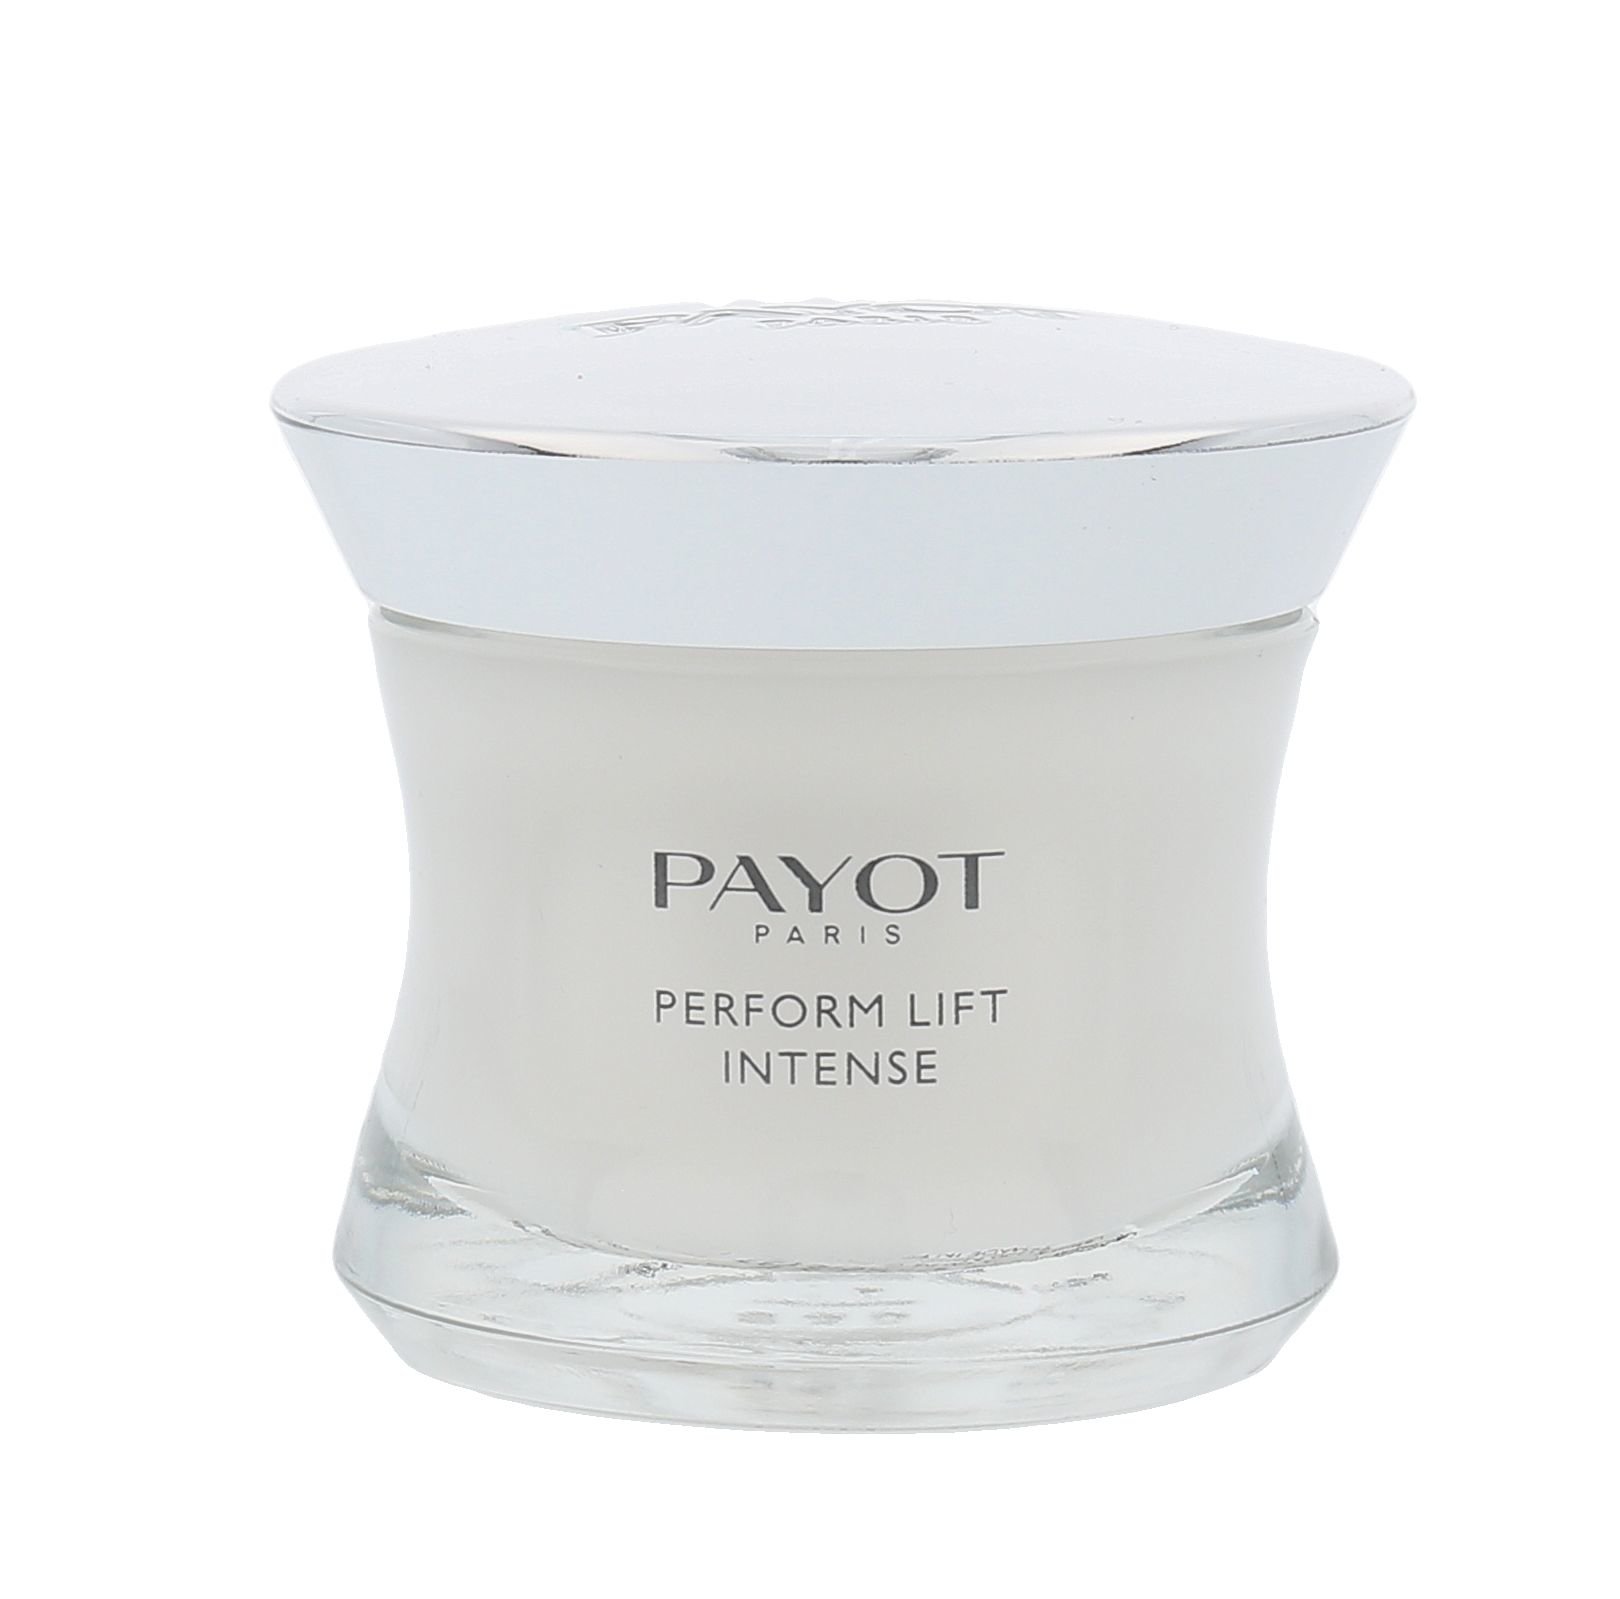 Payot Perform Lift Intense